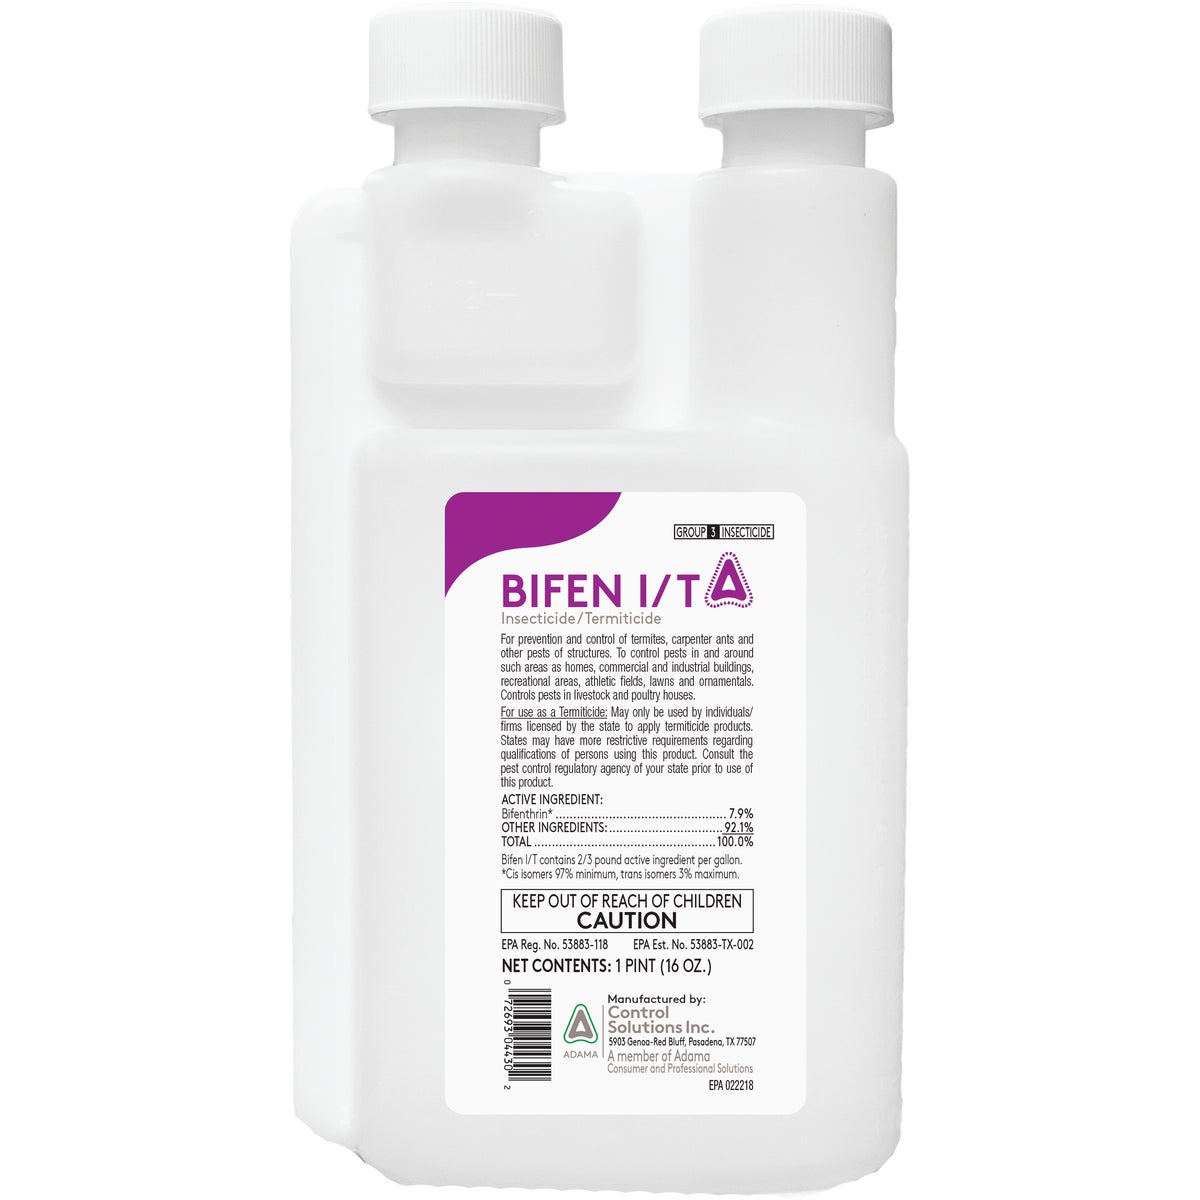 Item 703170, Bifen I/T professional strength termite insecticide.